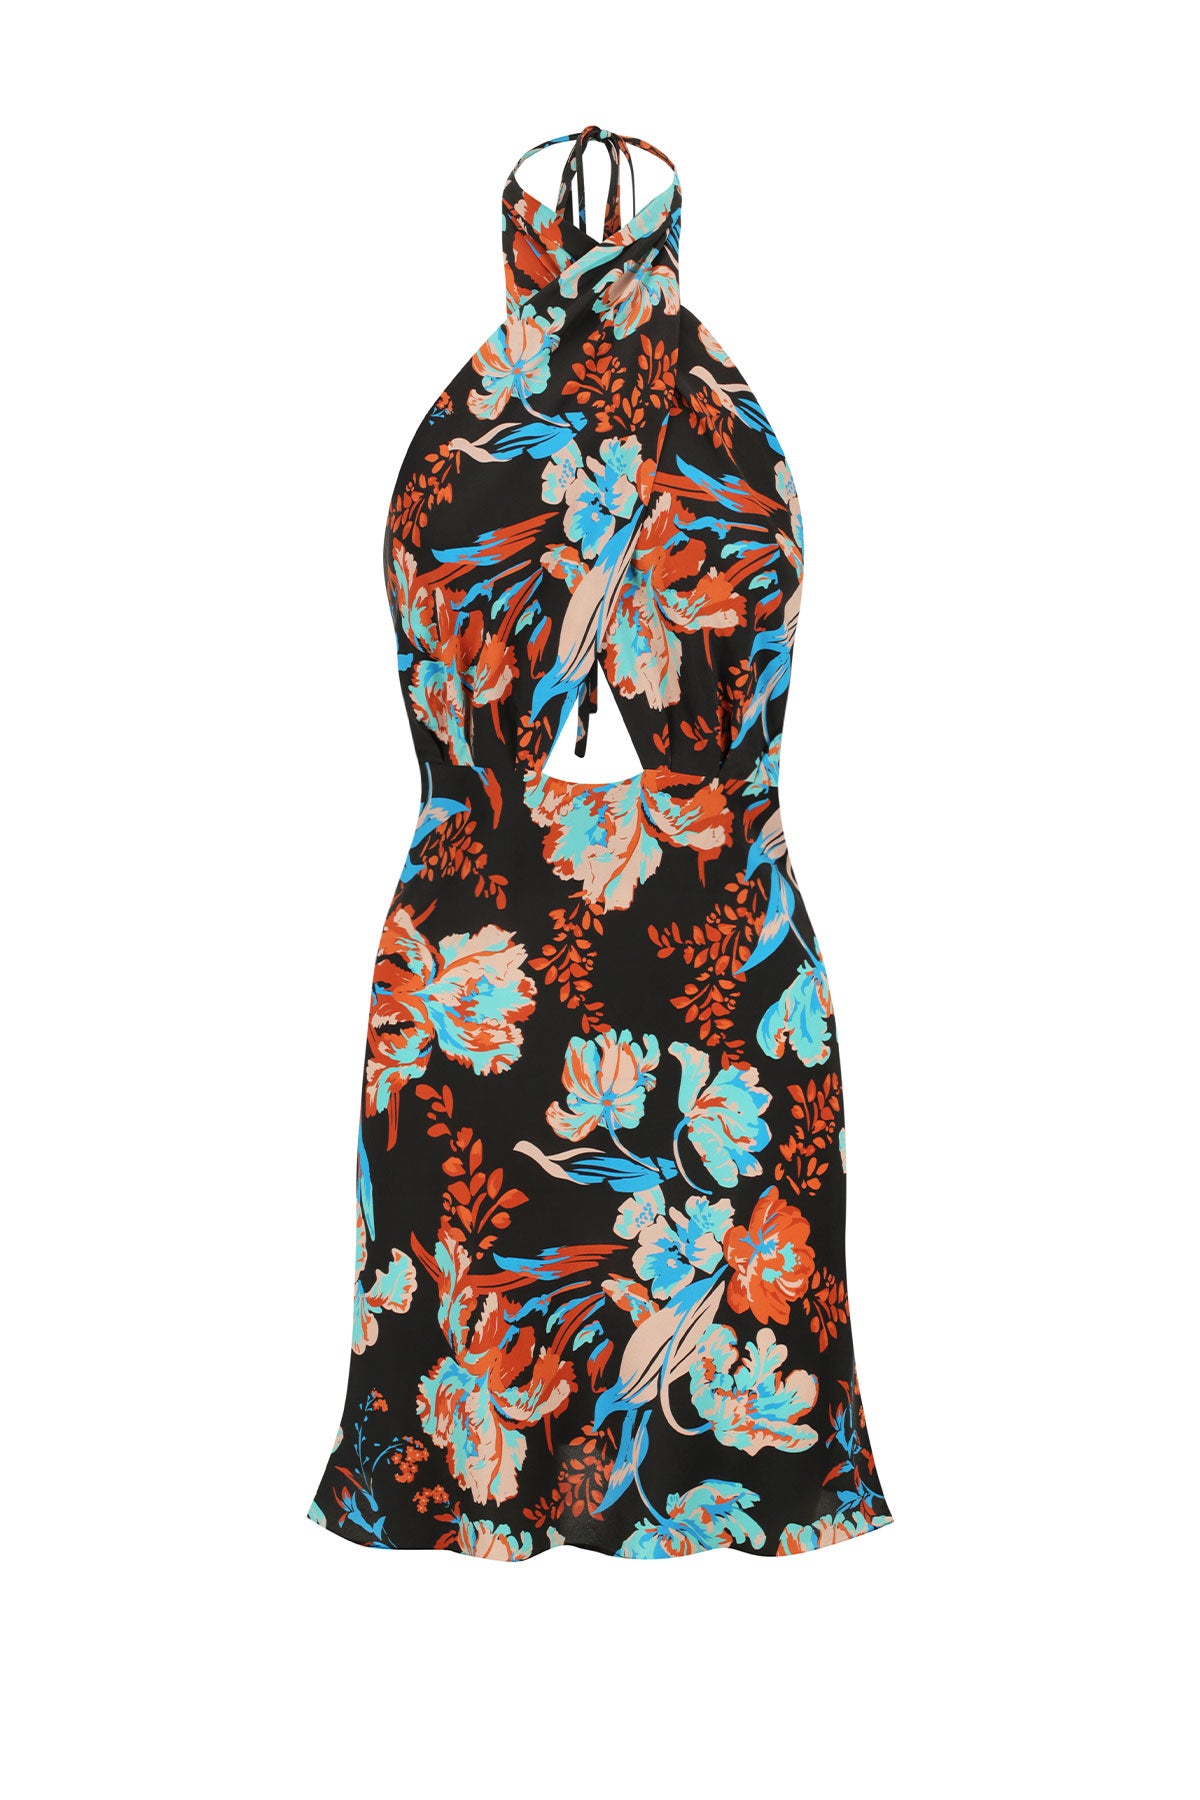 Shona Joy | Flotte Silk Cross Front Halter Bias Mini Dress